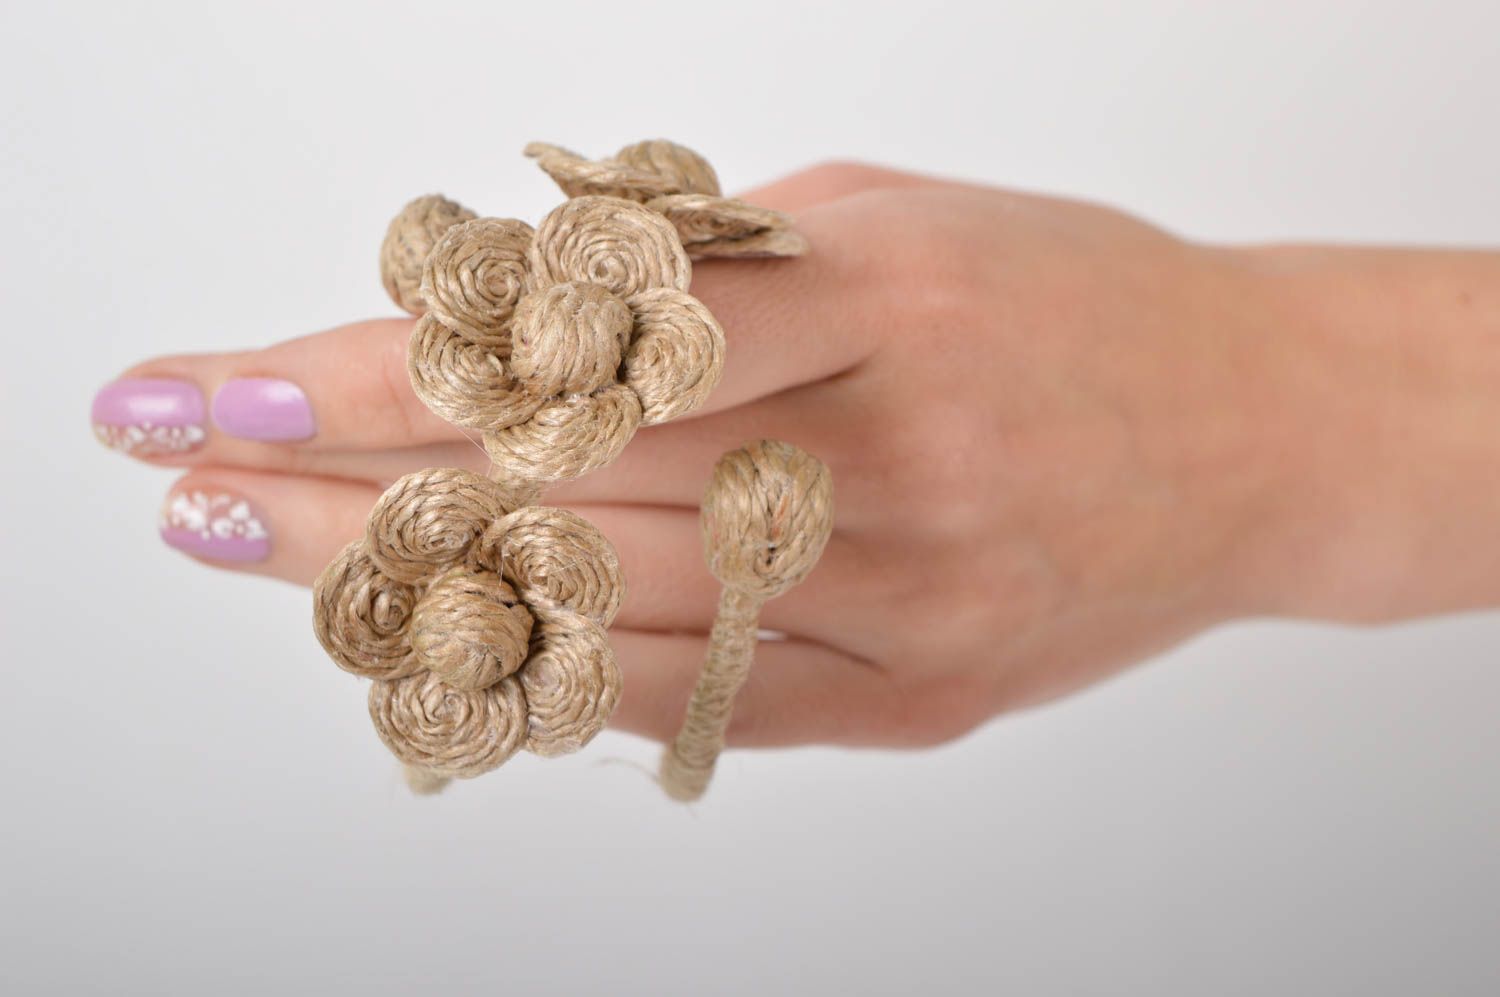 Handmade bracelet designer jewelry unusual accessory gift for her gift ideas photo 2